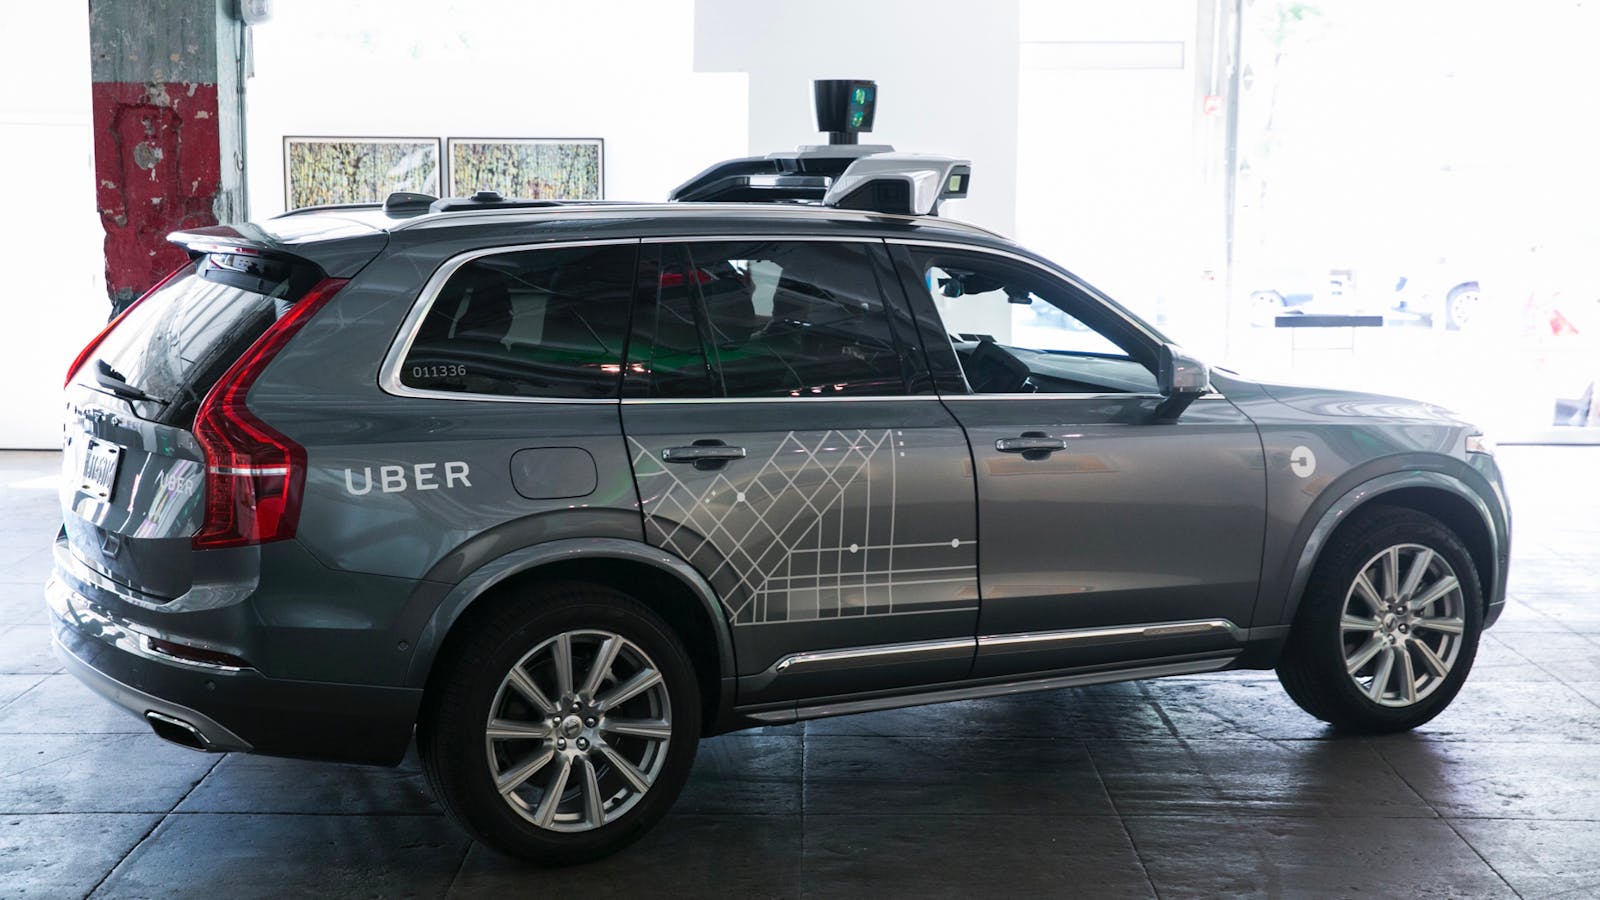 An Uber self-driving car. Photo by AP